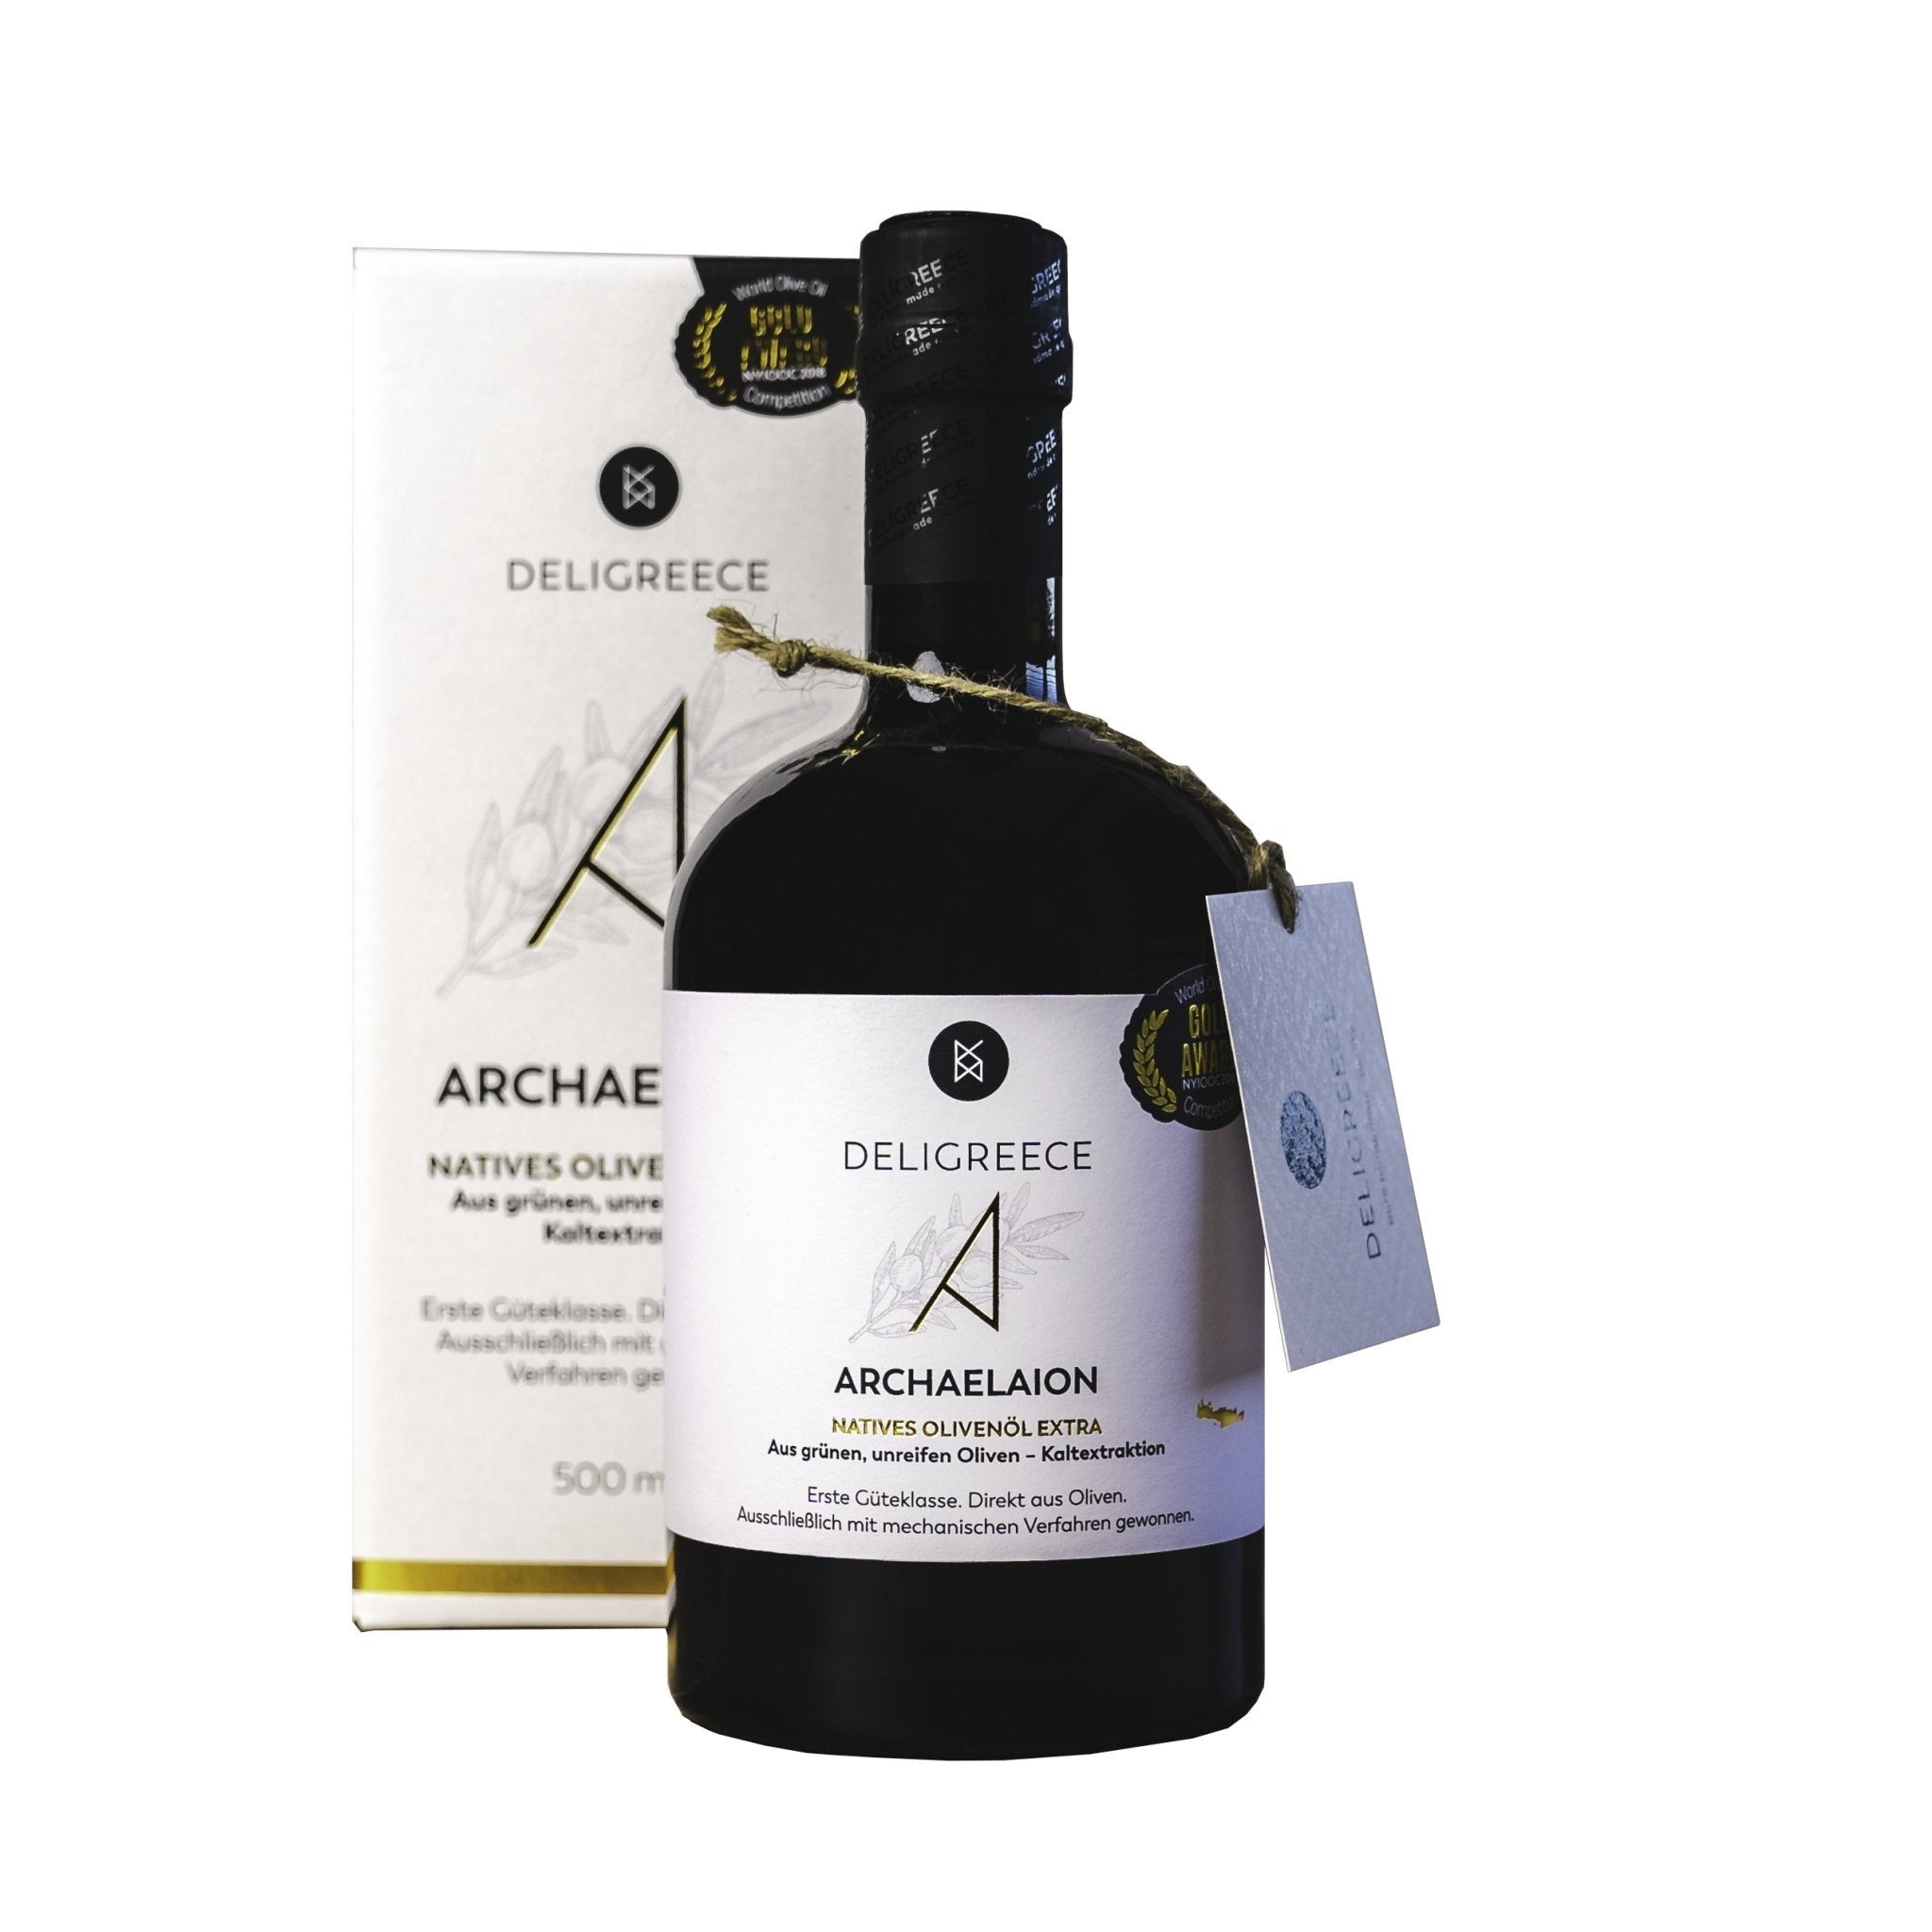 Deligreece Archaelaion natives Olivenöl extra (0,5l) - Gourmet Markt - Deligreece